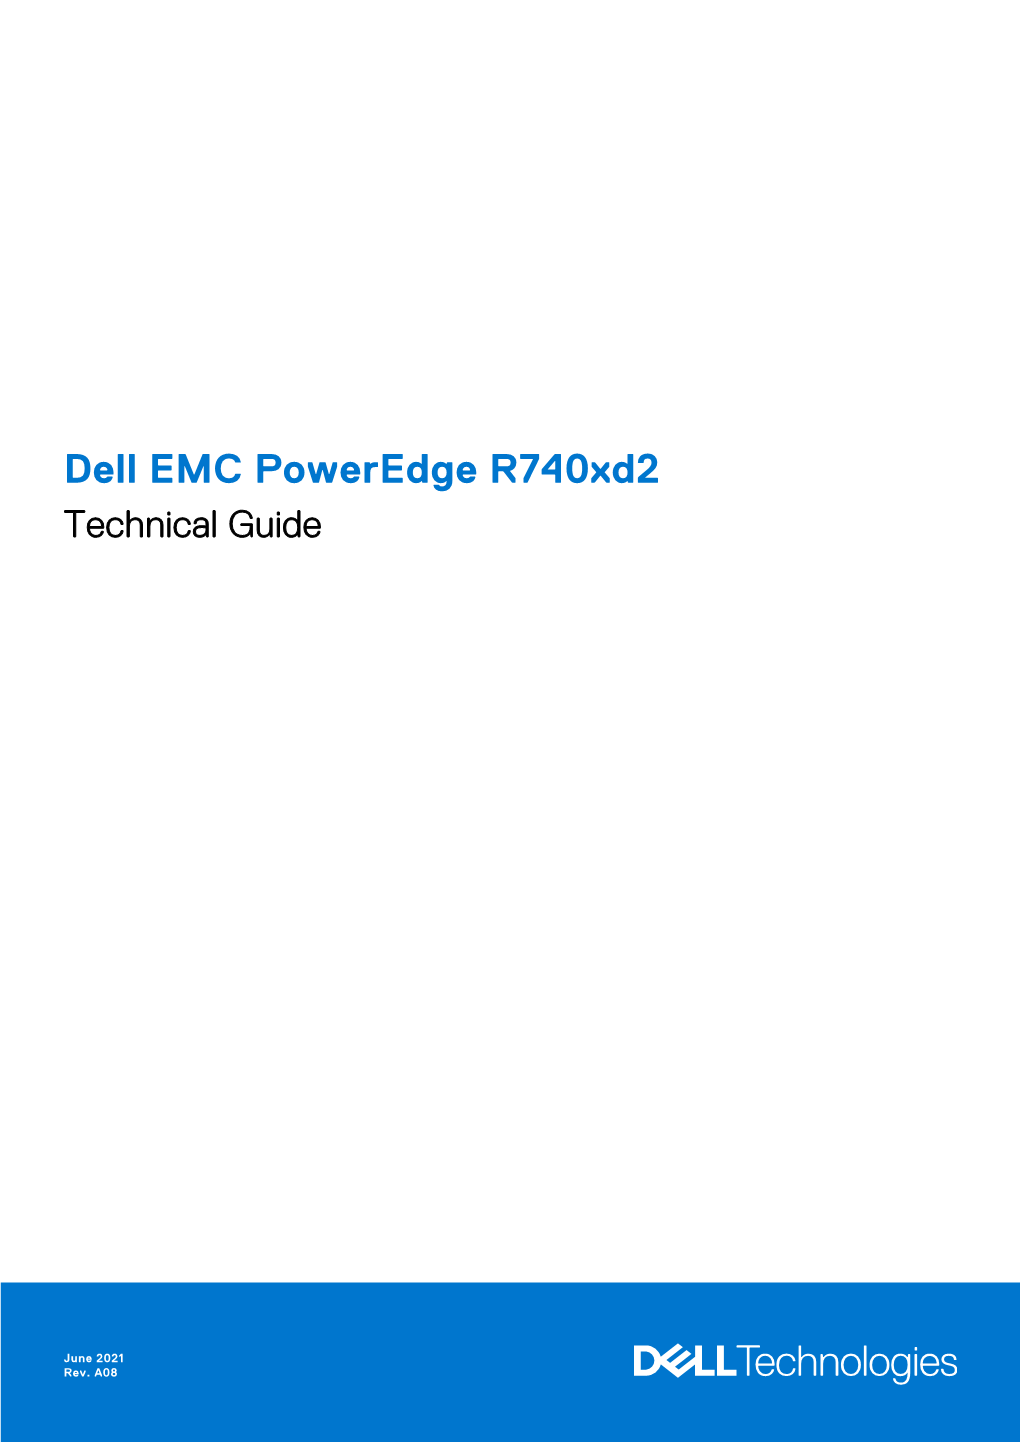 Dell EMC Poweredge R740xd2 Technical Guide